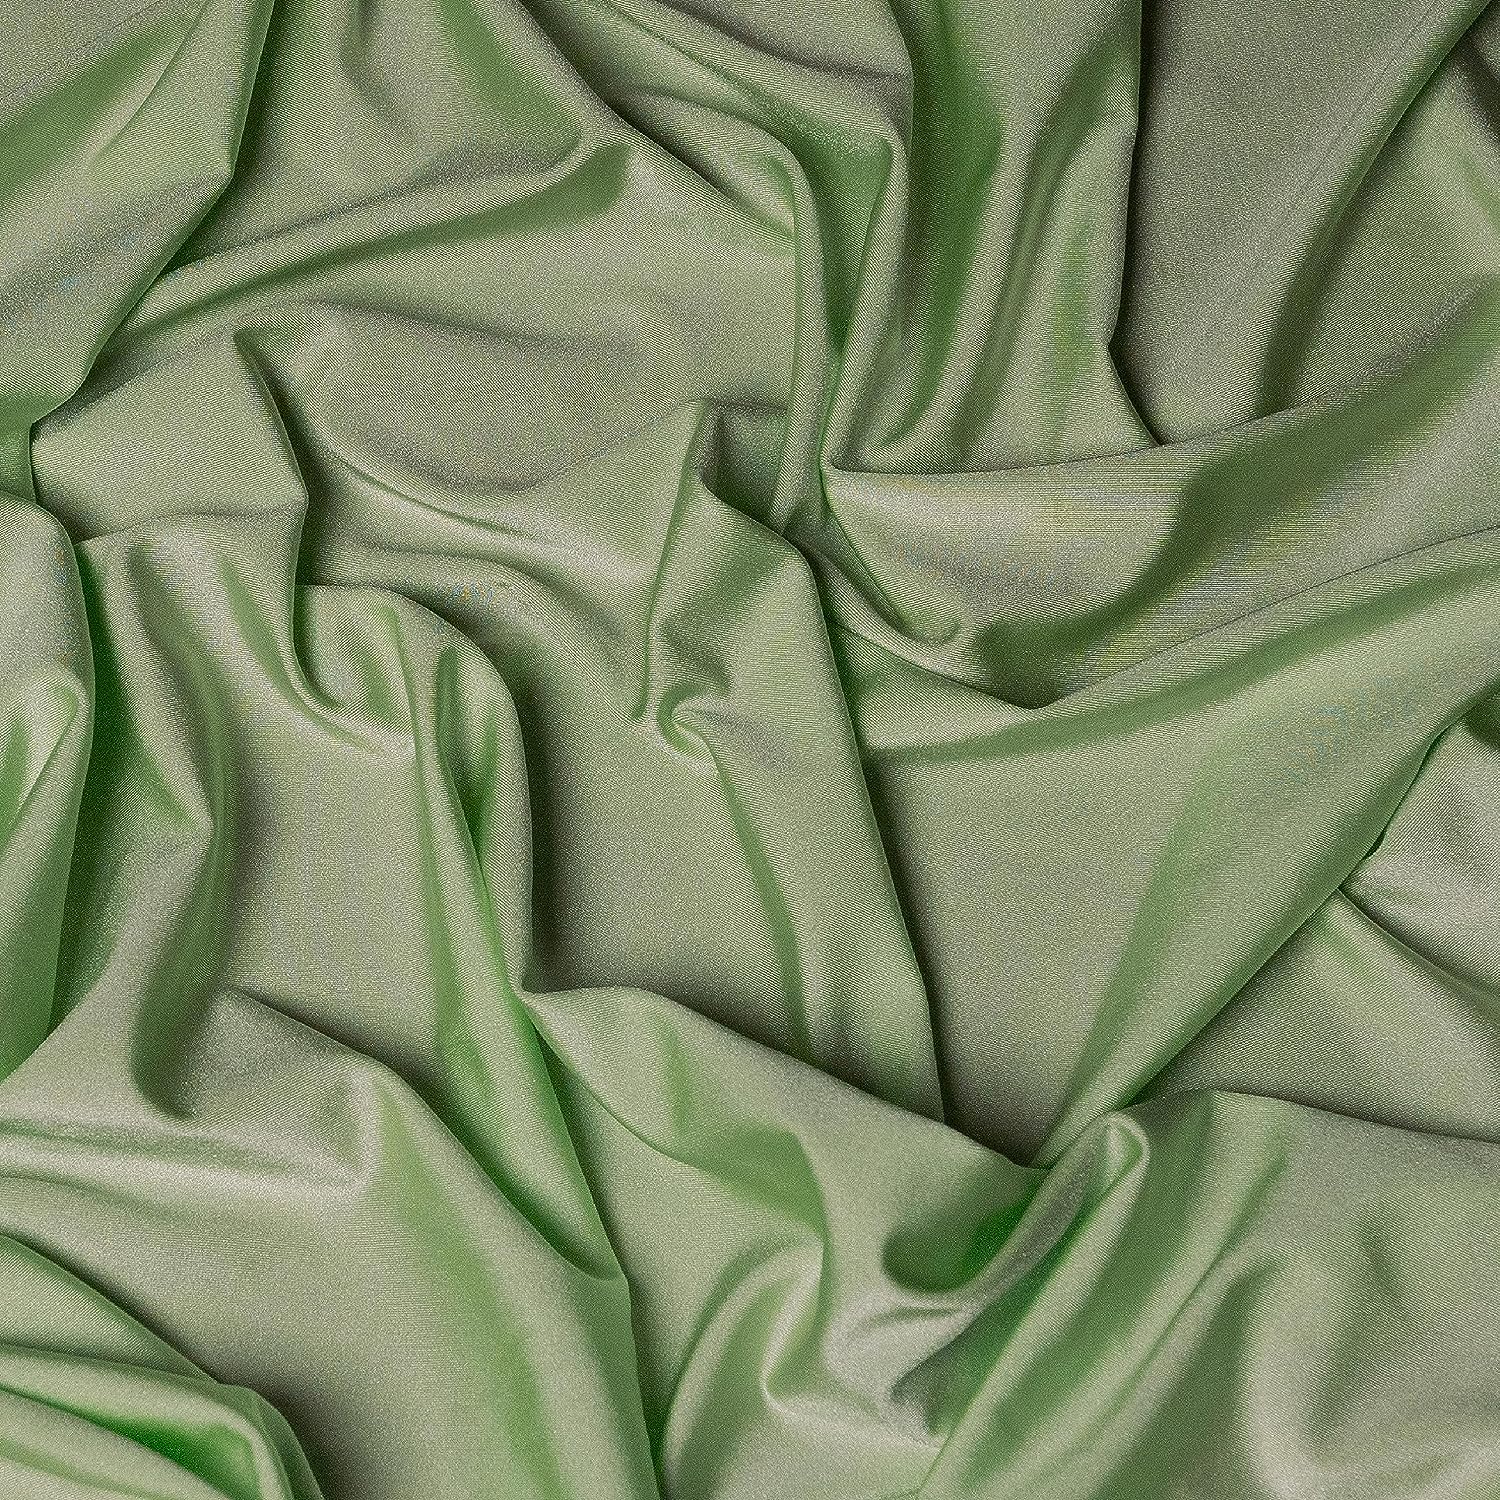 Shiny Milliskin Nylon Spandex Fabric 4 Way Stretch 58 wide Sold By The  Yard Many Colors (Black) 